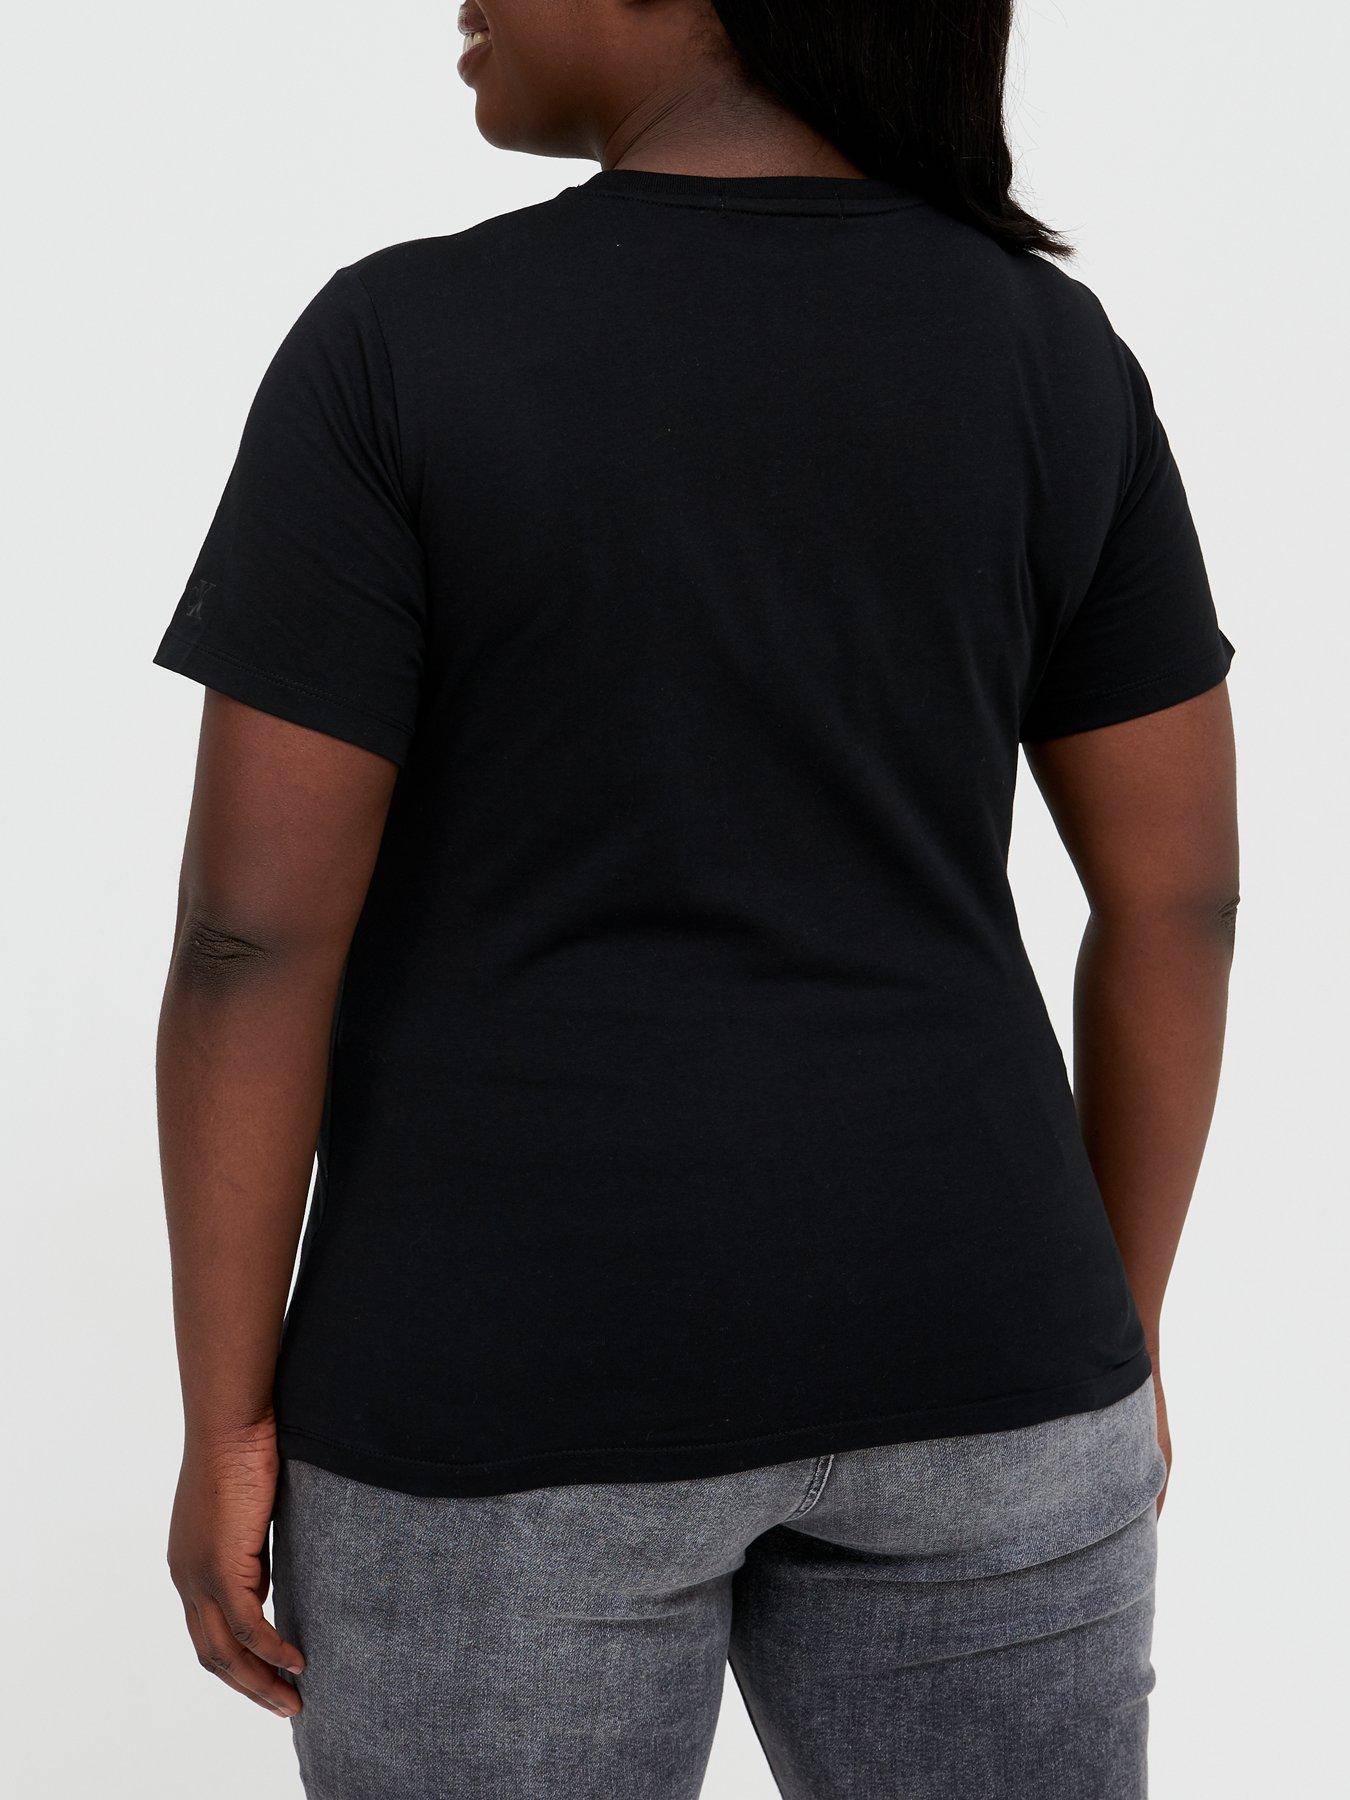 Klein Jeans Plus Size Inst Round Neck T-Shirt - Black | littlewoods.com